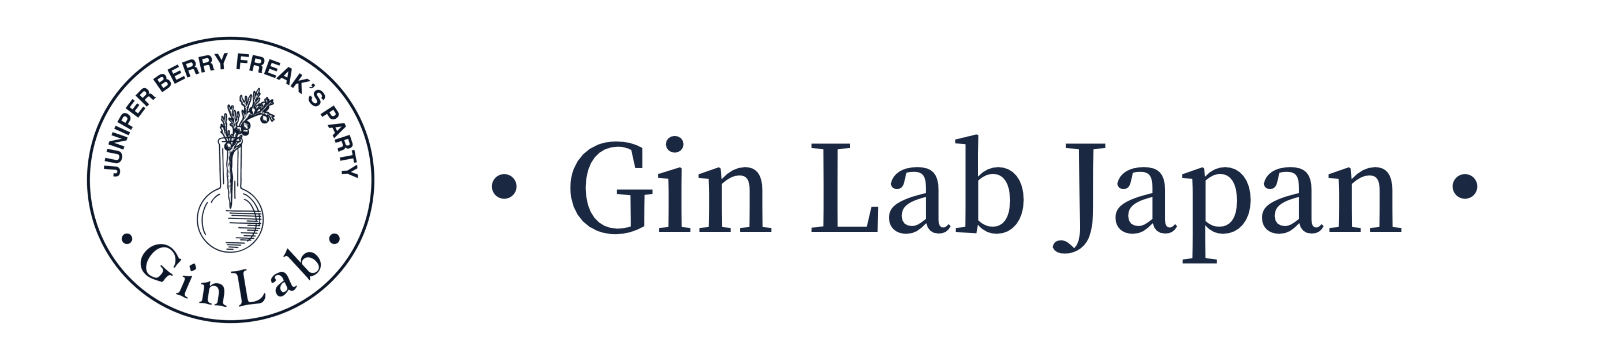 Gin Lab Japan (ジンラボジャパン)